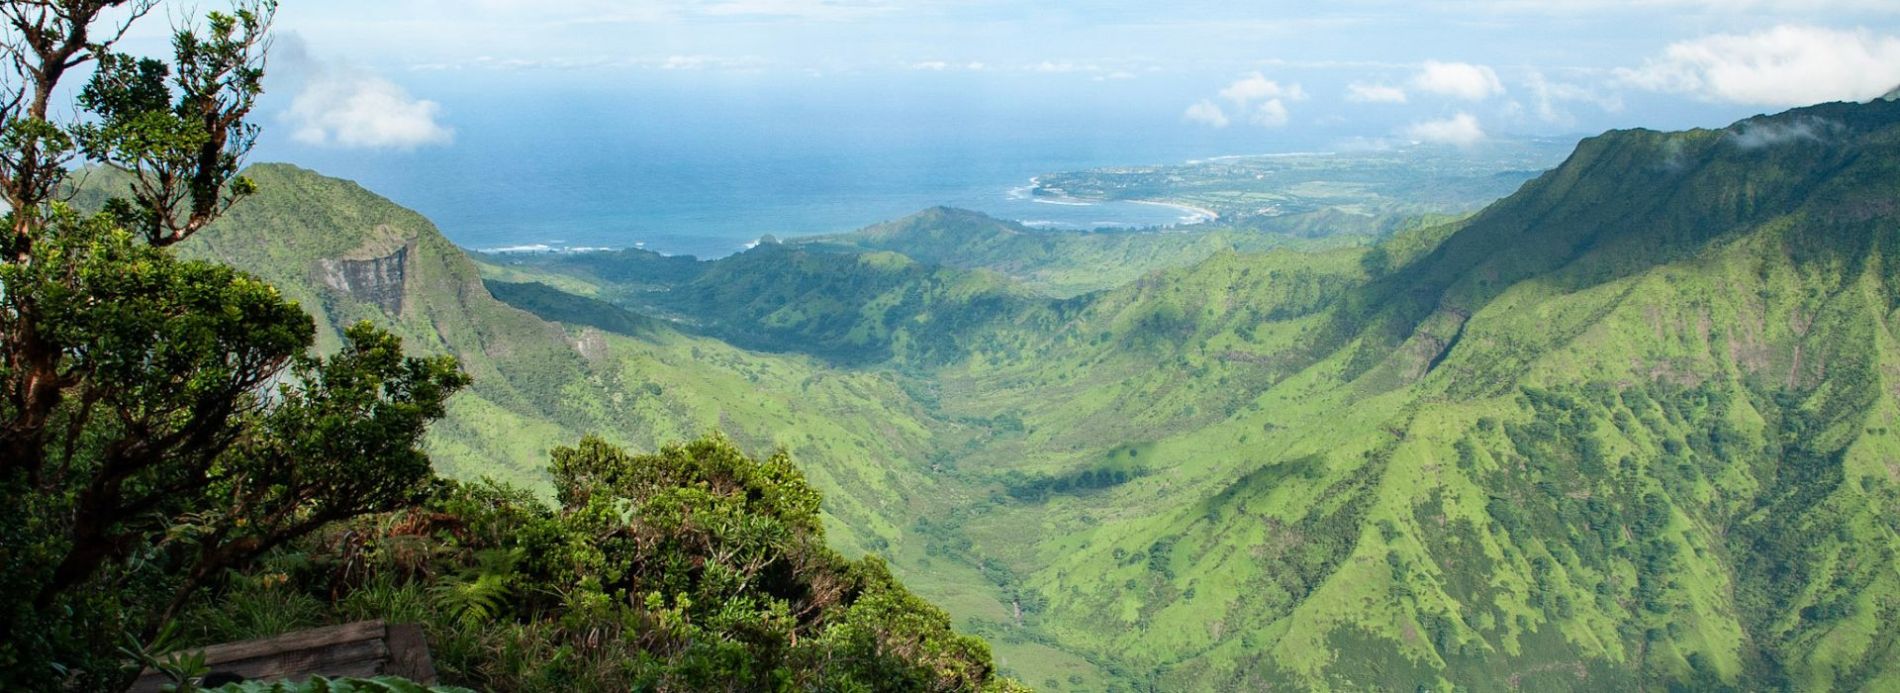 Beautiful Kauai scenery viewed from mountain peak